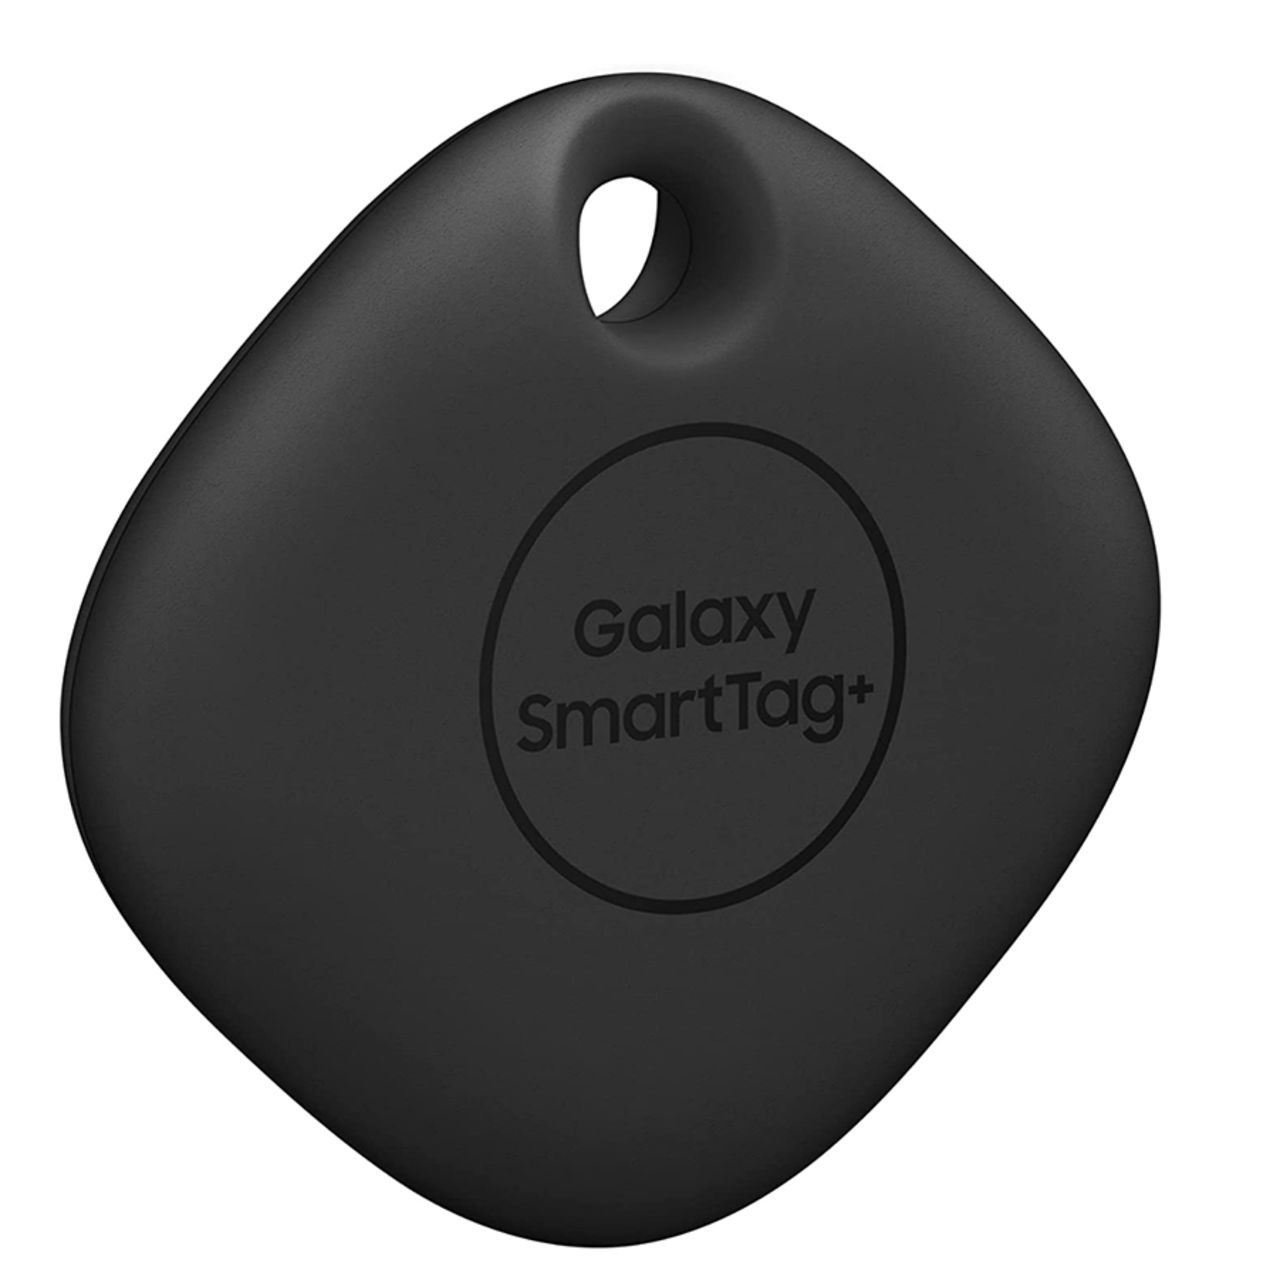 Samsung Galaxy SmartTag review -  news